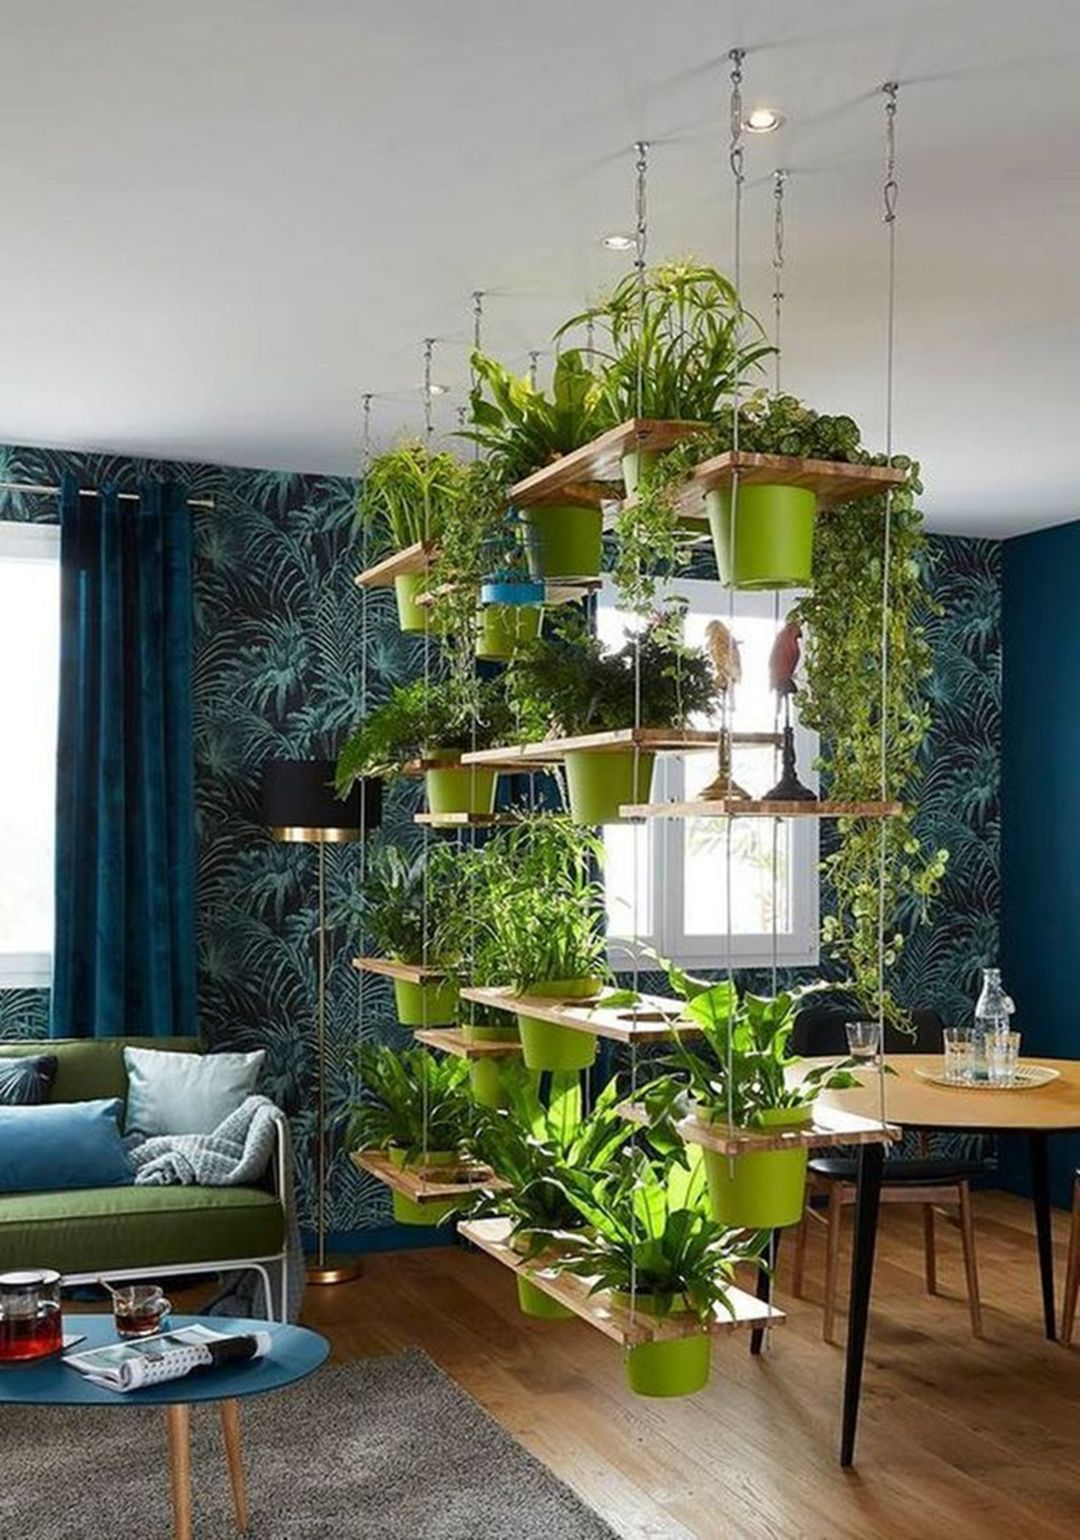 10 Beautiful Living Room Decorations with Inspiring Ornamental Plant Ideas -   15 planting decor ideas